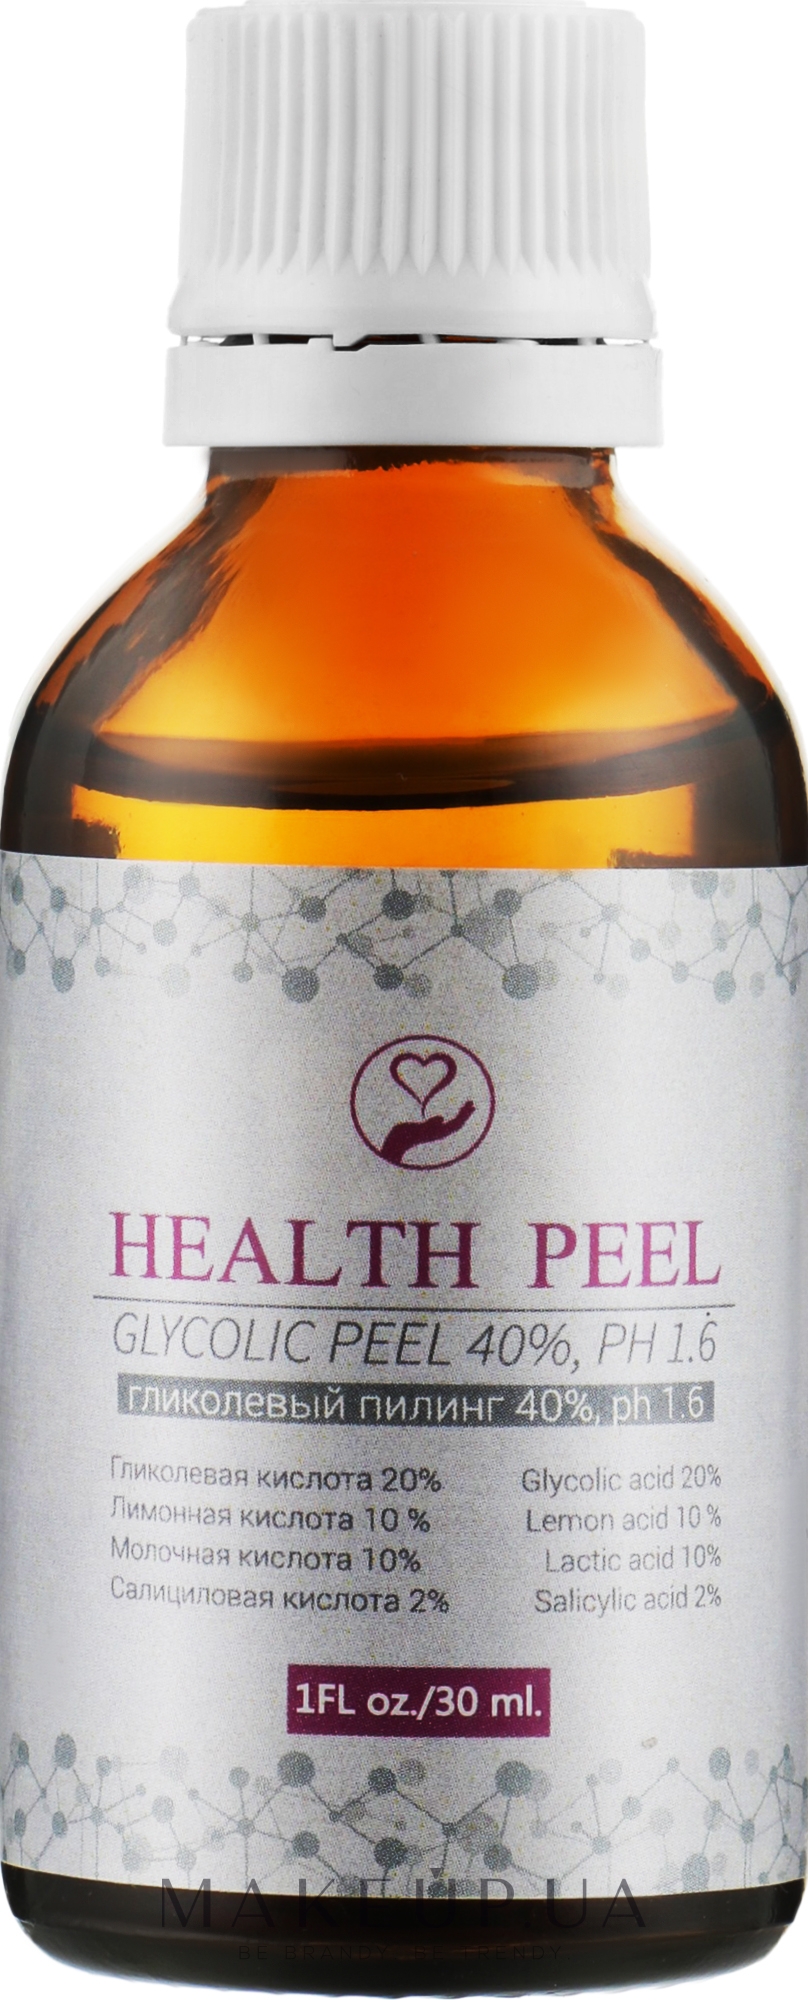 Гликолевый пилинг 40 % - Health Peel Glycolic Peel, pH 1.6 — фото 30ml